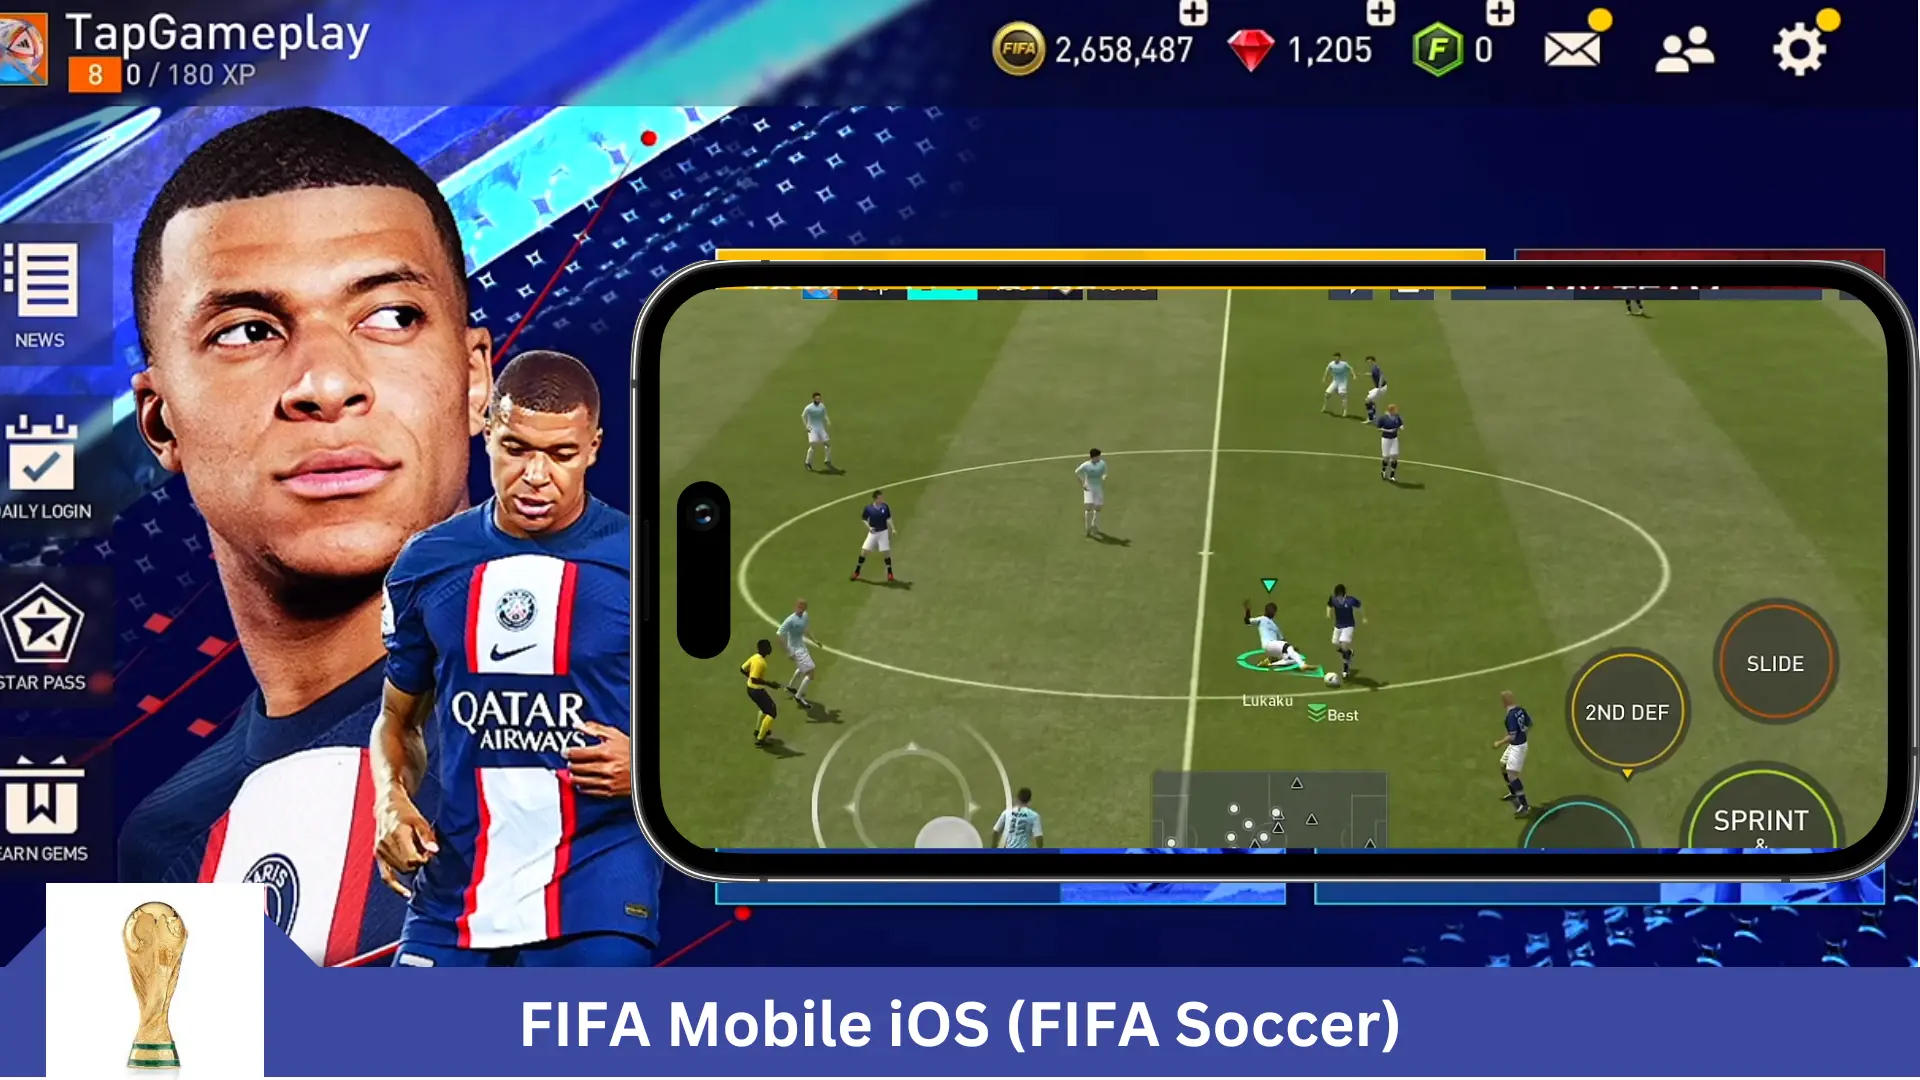 FIFA Mobile on iPhone 6 Plus ios 12.5.5 